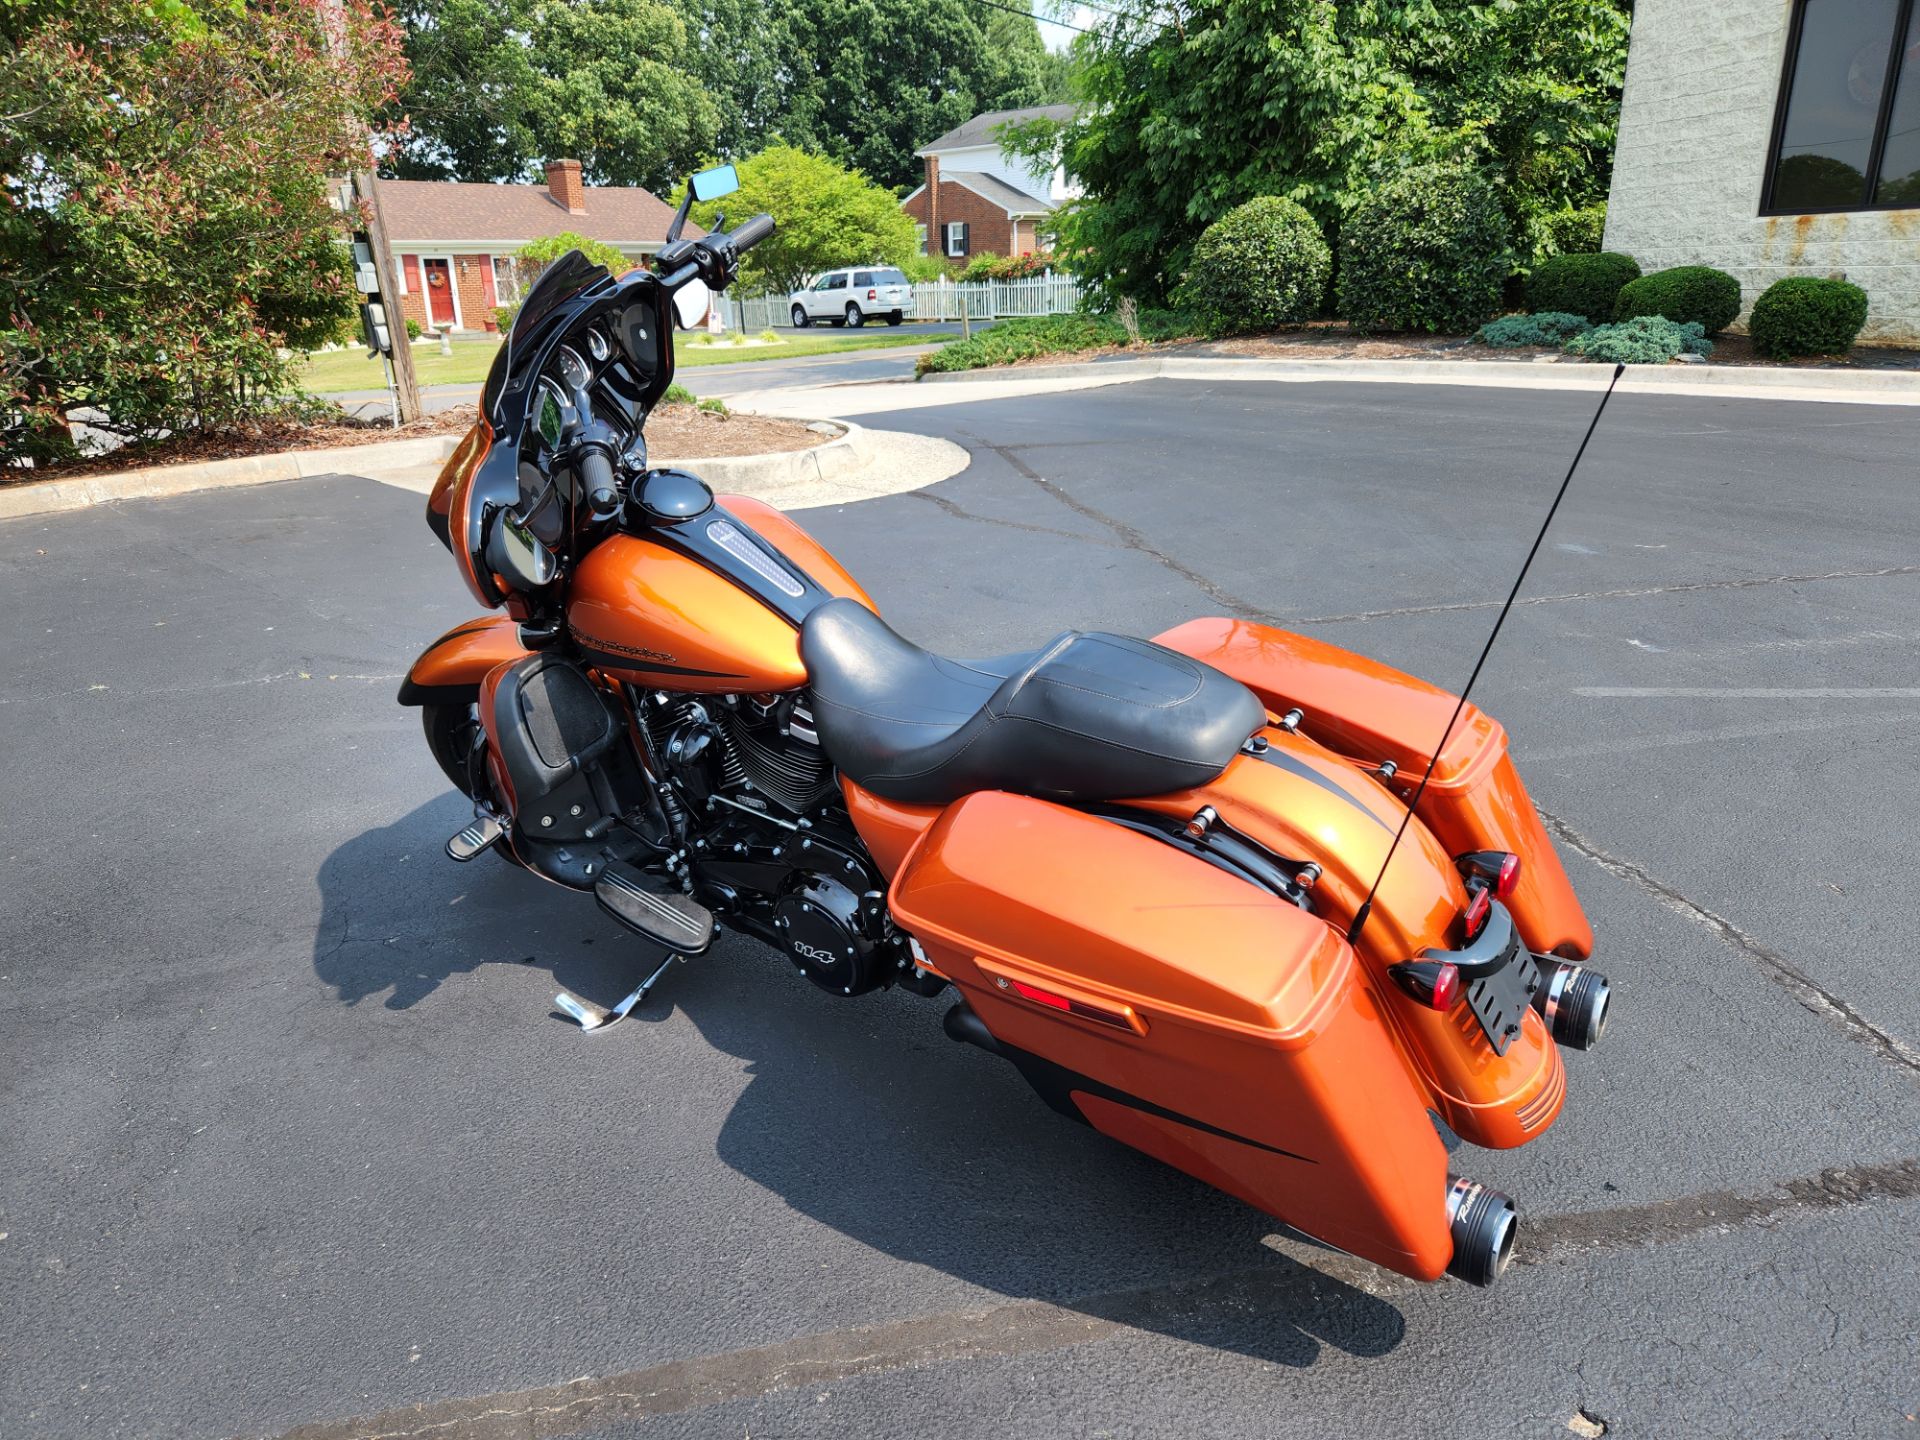 2019 Harley-Davidson Street Glide® Special in Lynchburg, Virginia - Photo 8